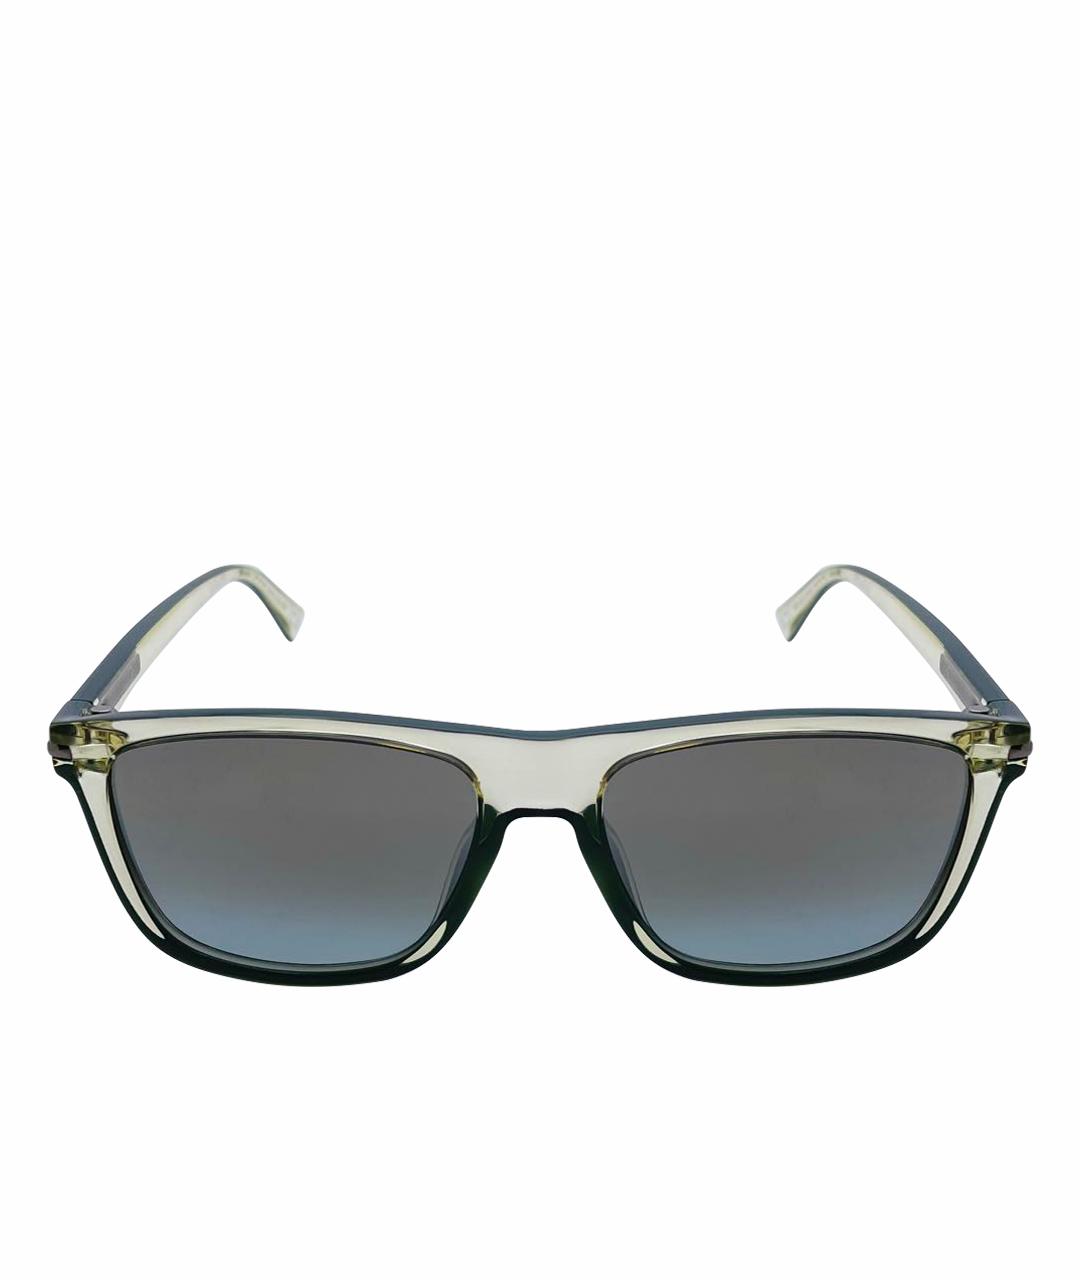 JIMMY CHOO Пластиковые солнцезащитные очки, фото 1